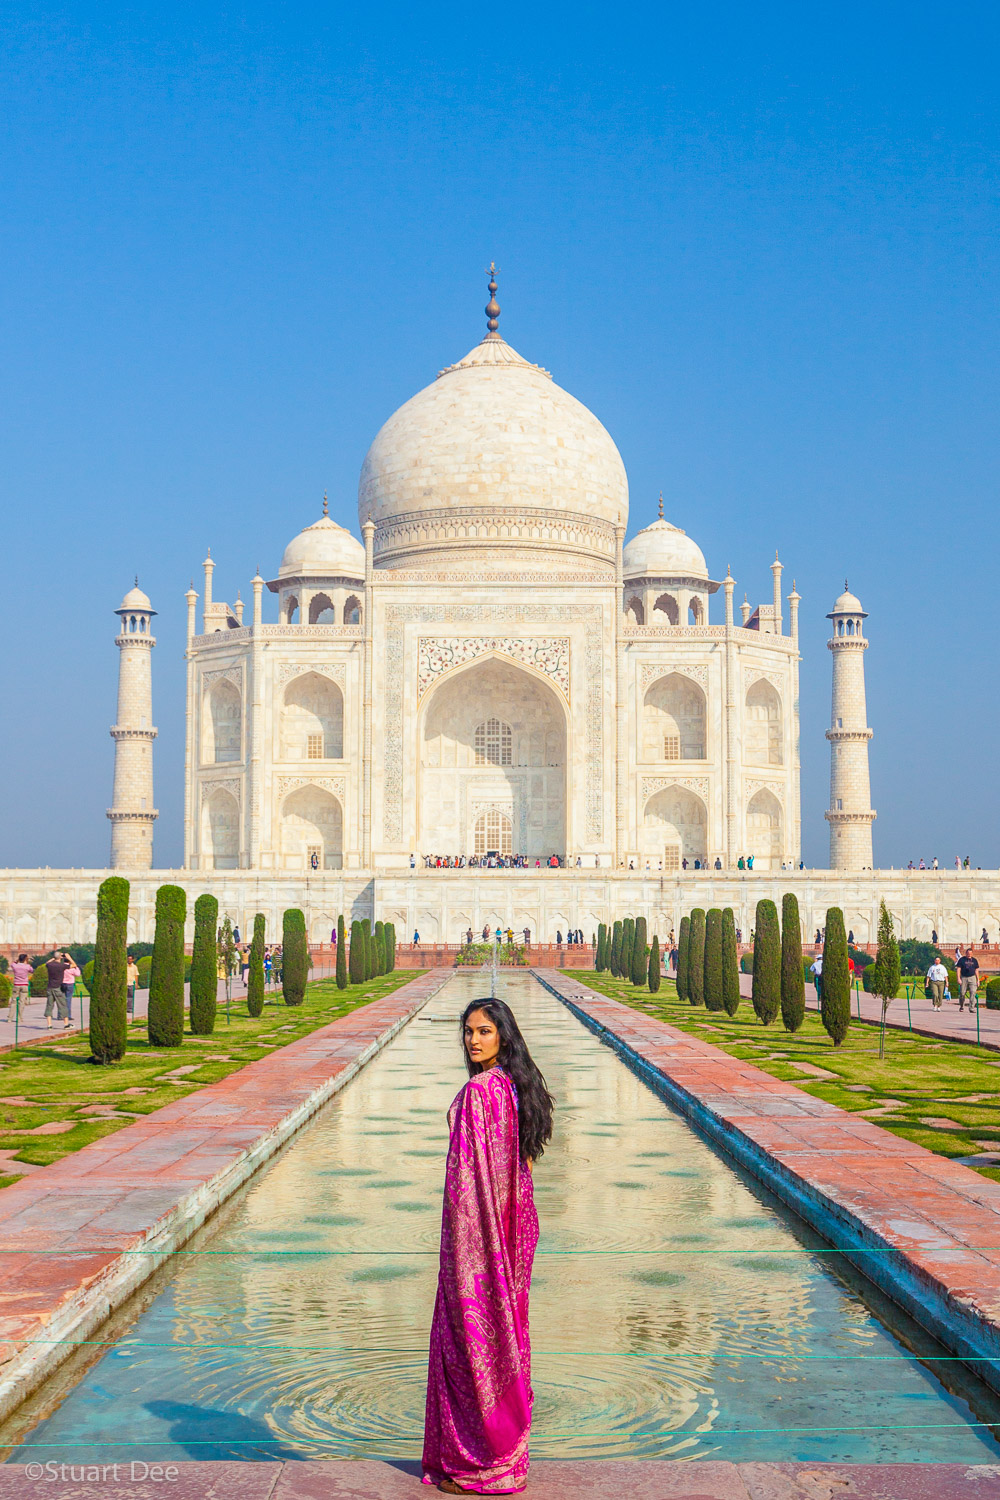  Taj Mahal, Agra, Uttar Pradesh, India. The Taj Mahal is the most recognized symbol of India. 